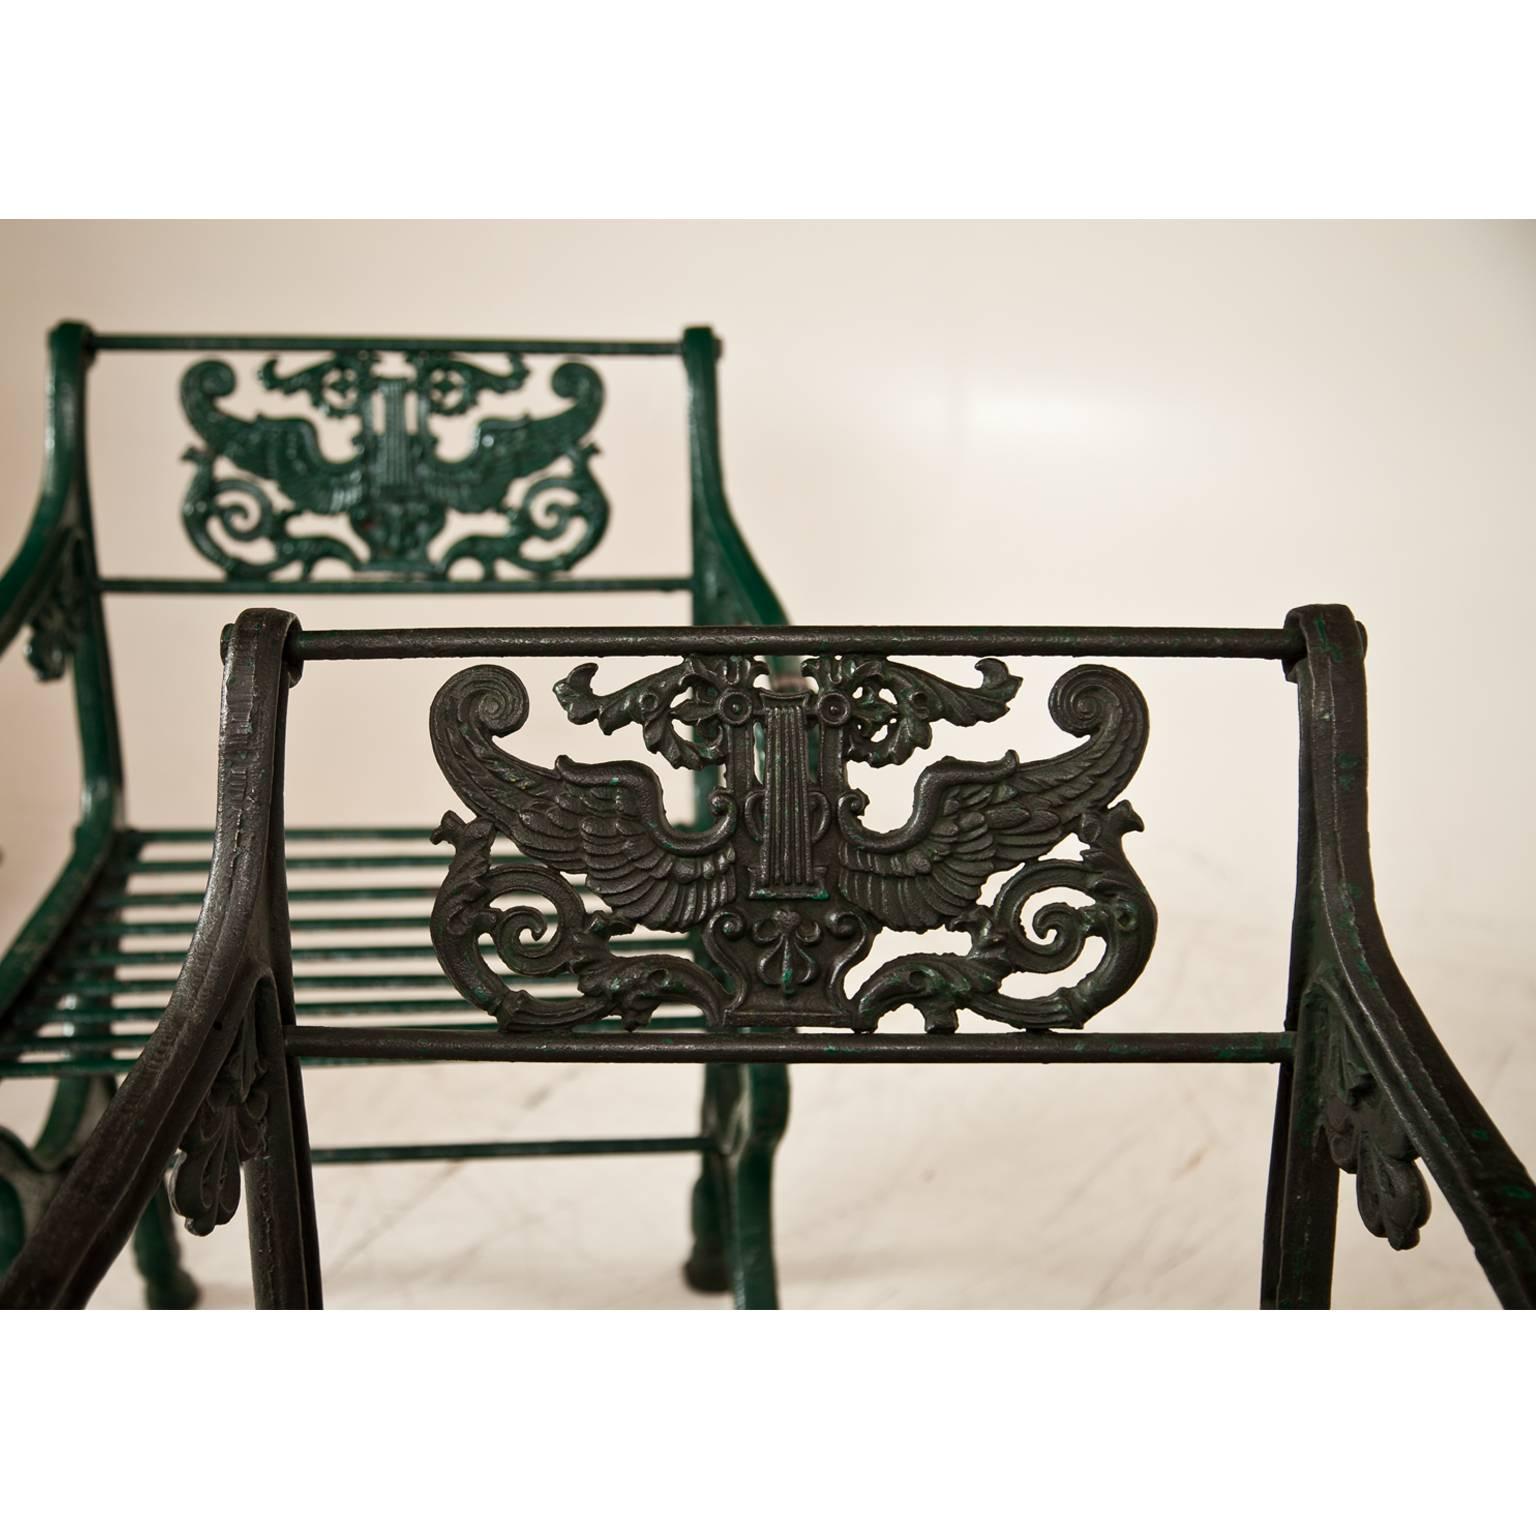 Wrought Iron Cast Iron armchair after a Design by Karl Friedrich Schinkel, Mid-19th Century